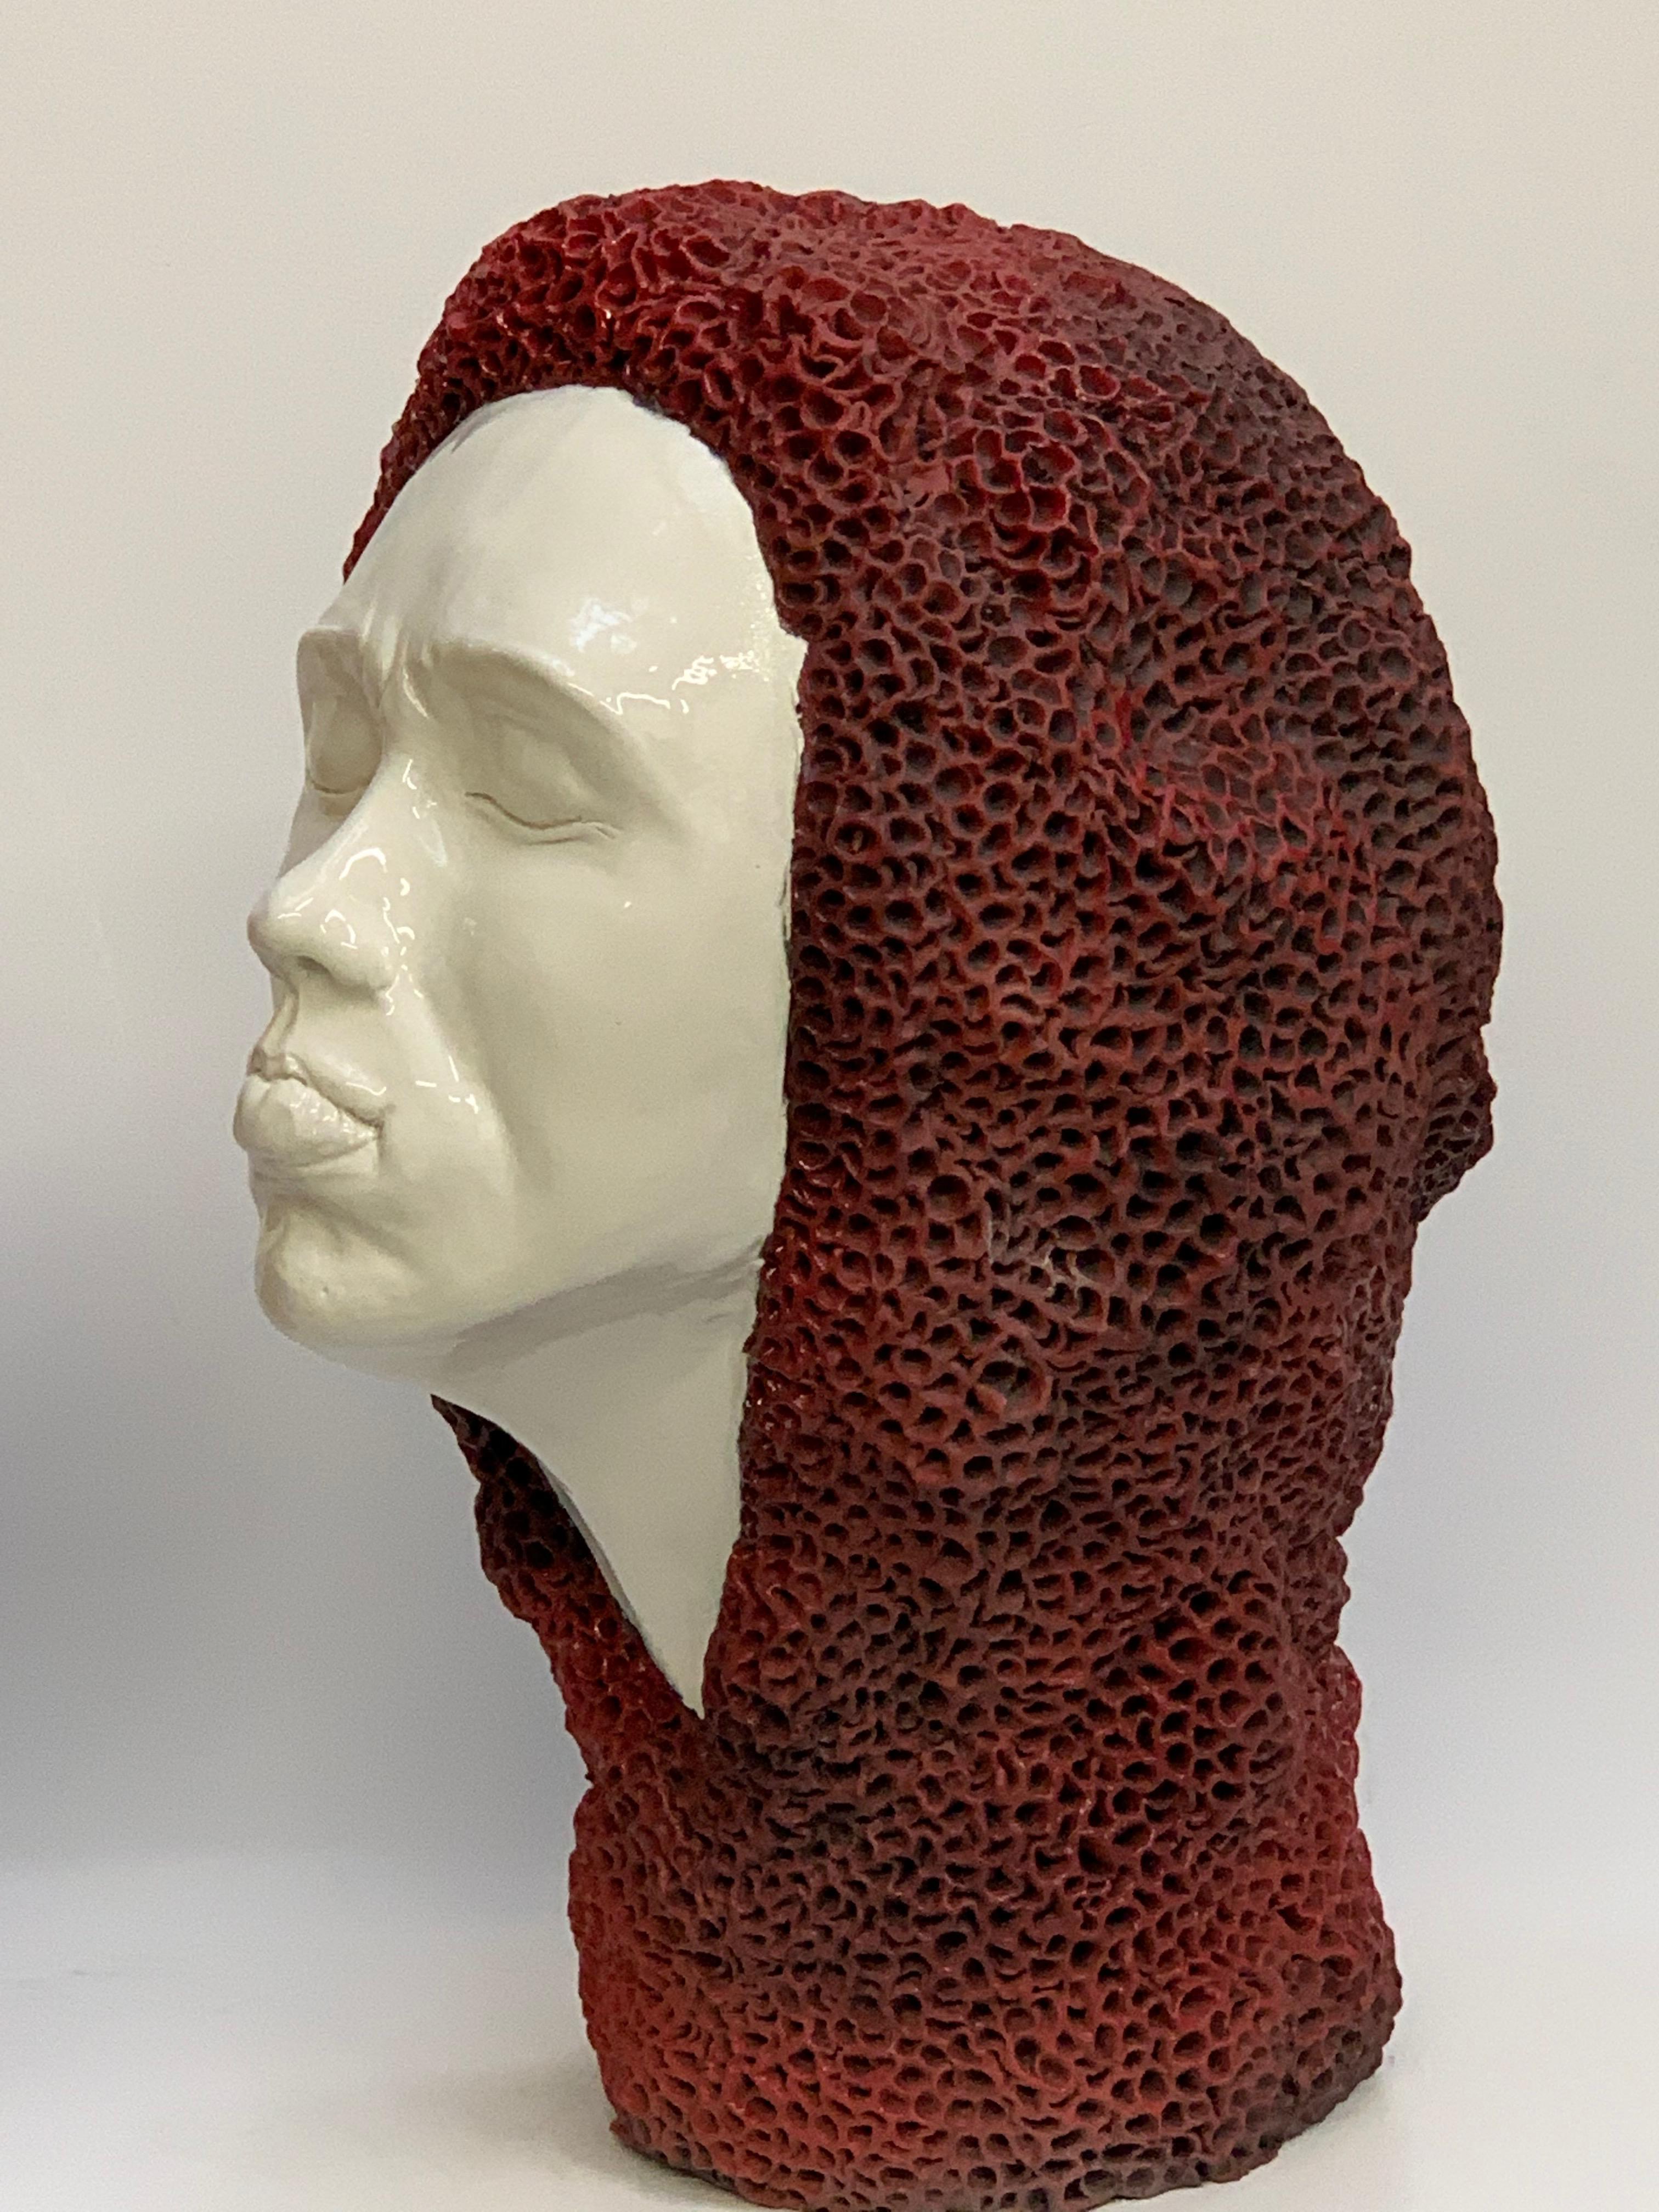 Modern Man's Head Sponge Decorative Ceramic Piece, Handmade Italy, 2021, Hand-Crafted For Sale